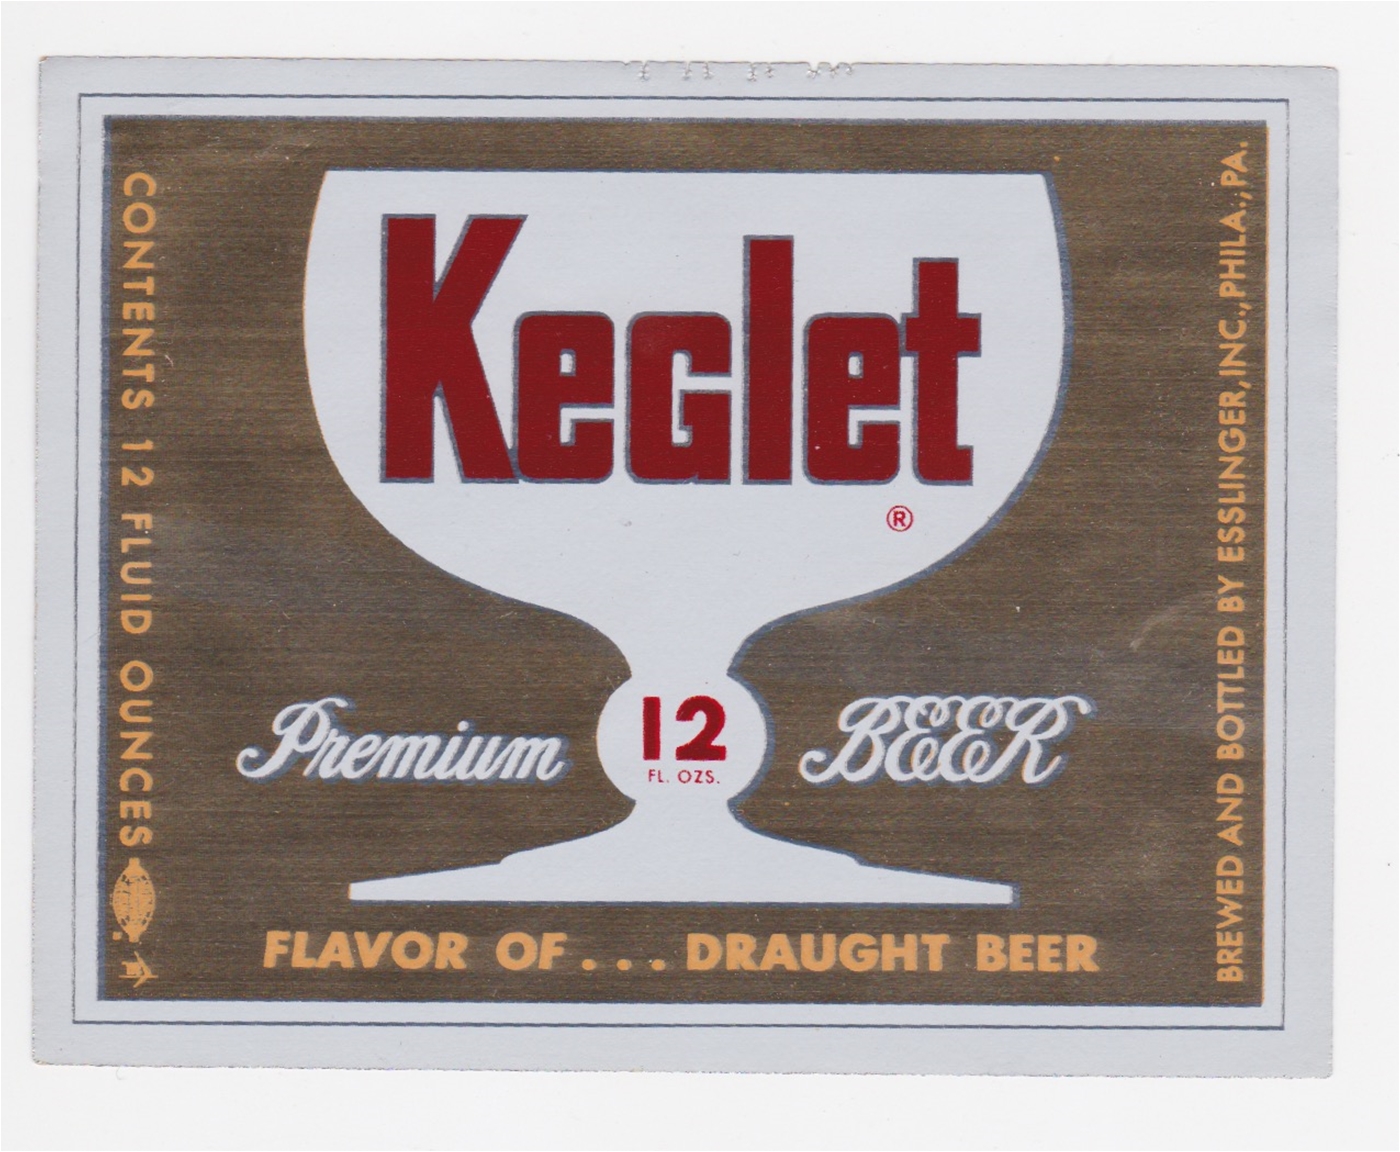 Keglet Premium Beer Label